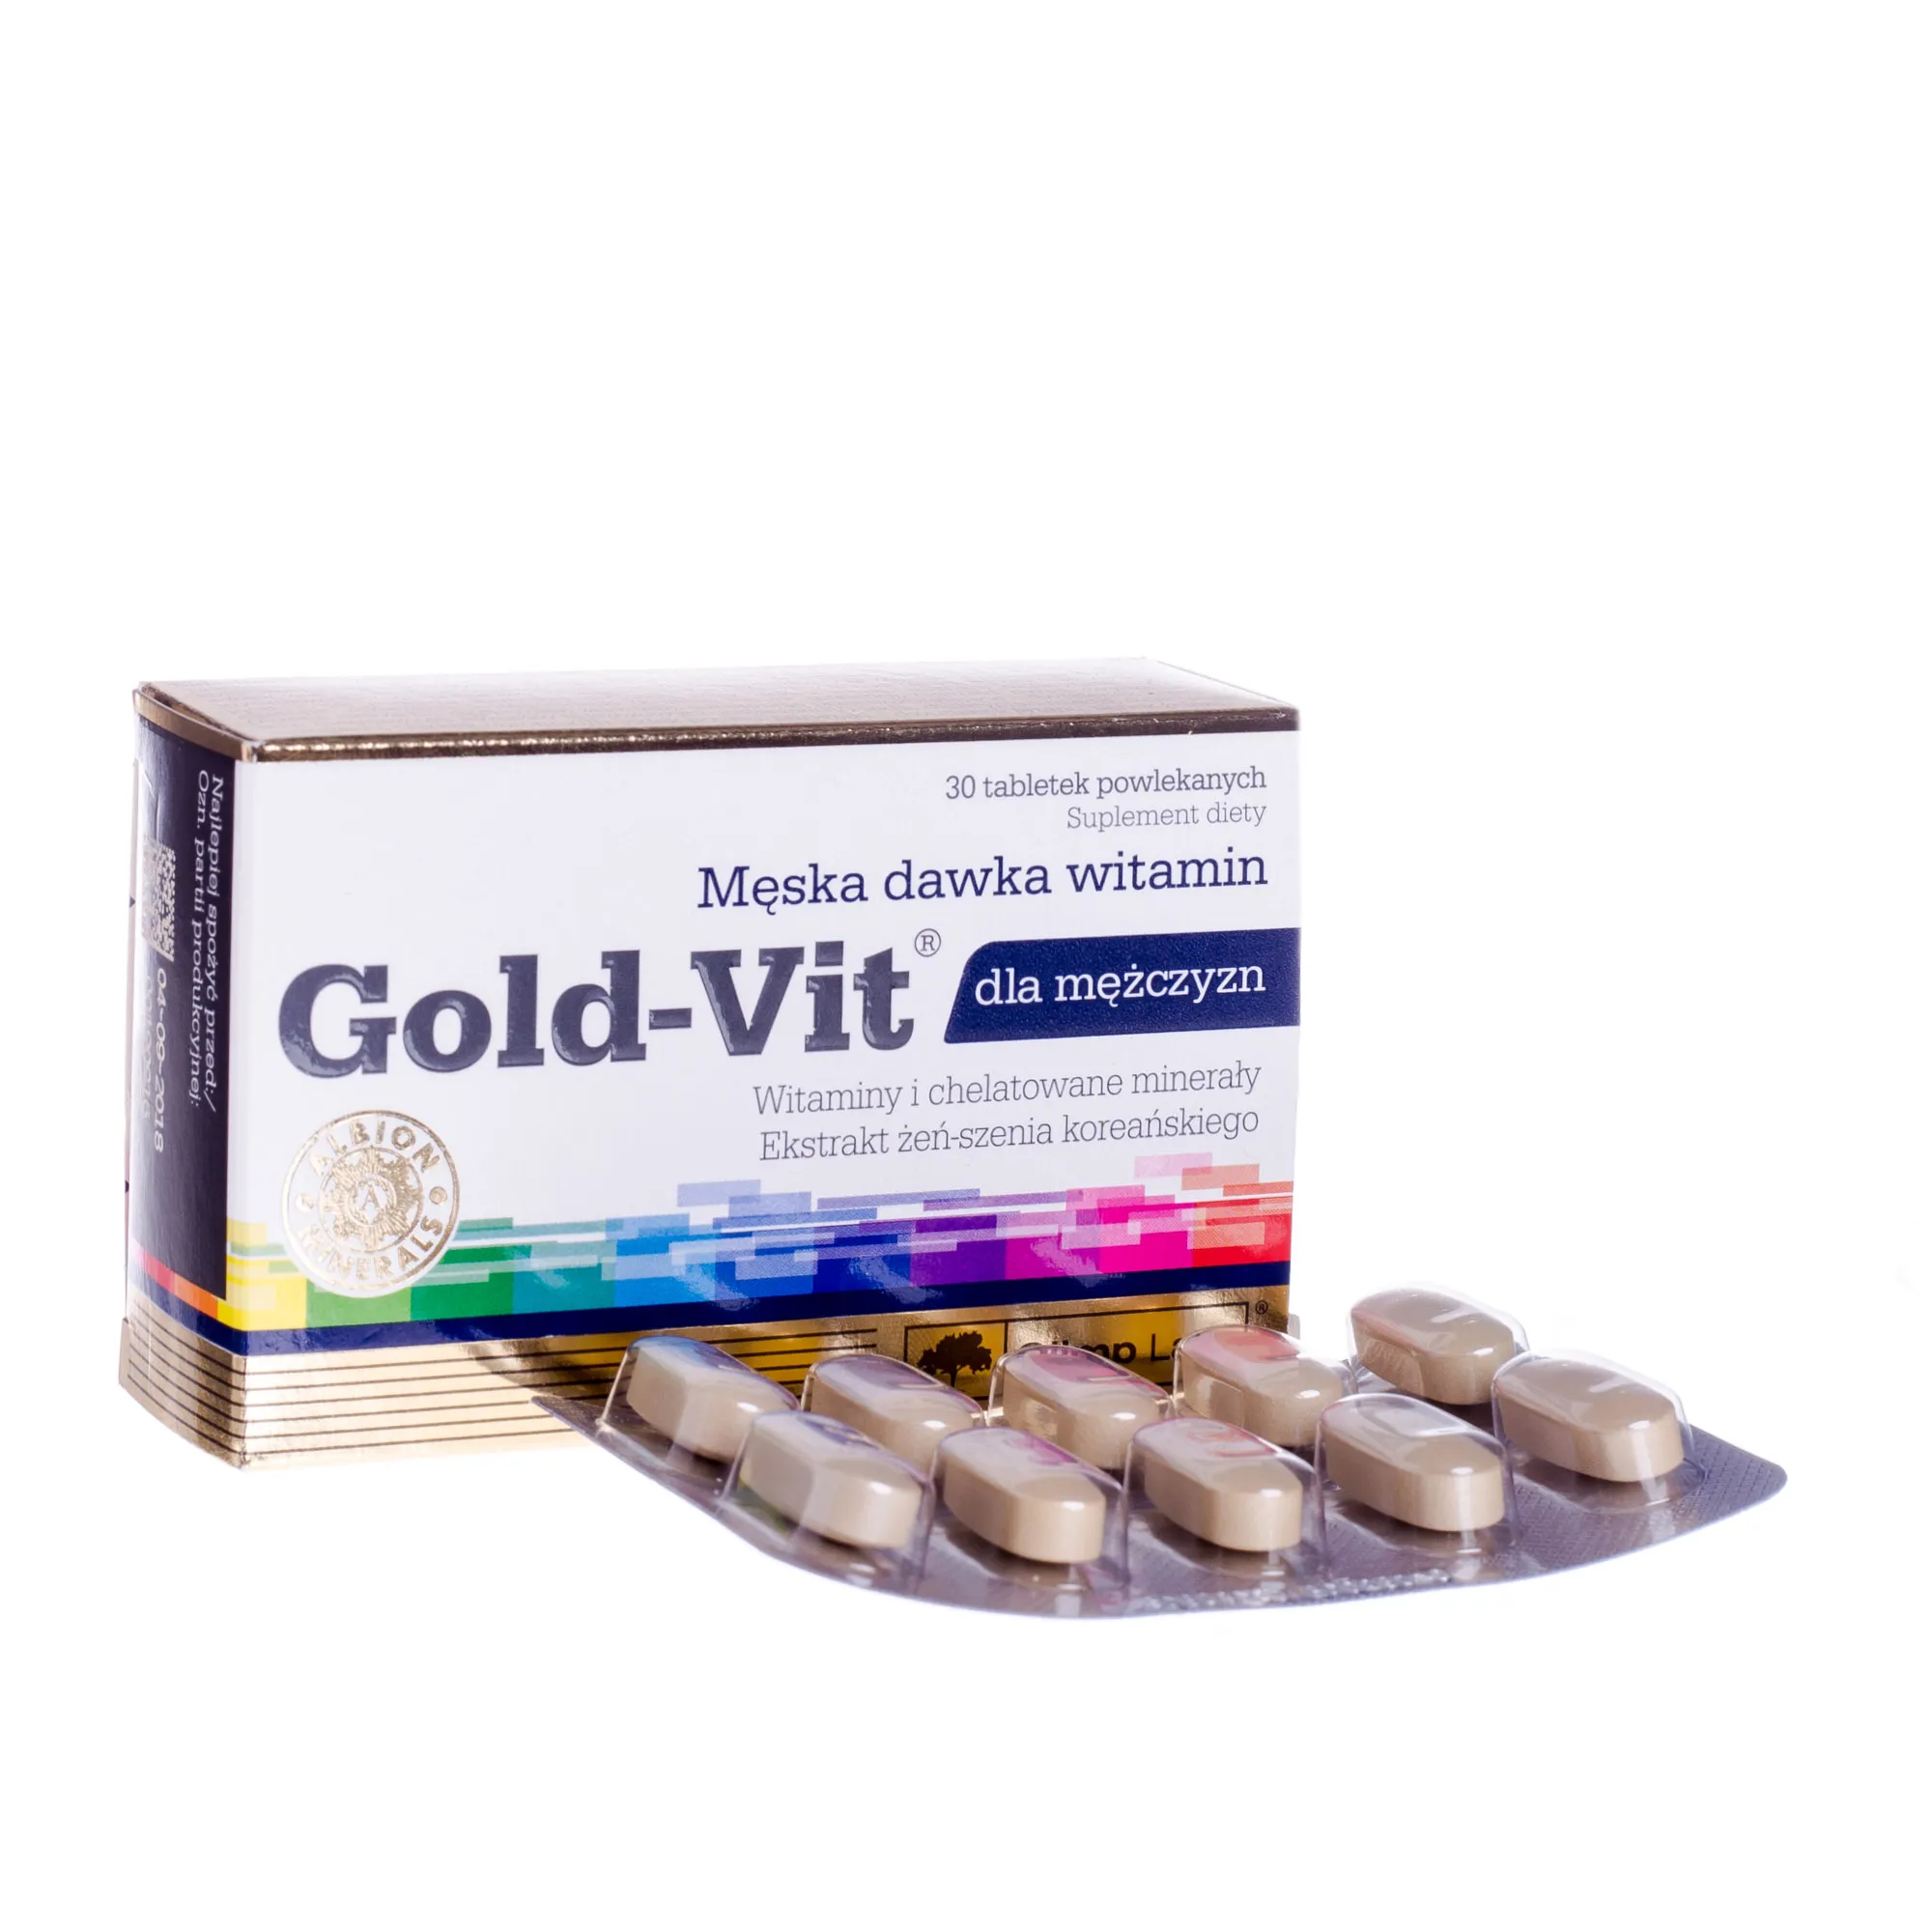 Olimp Gold-Vit dla mężczyzn, 30 tabletek powlekanych